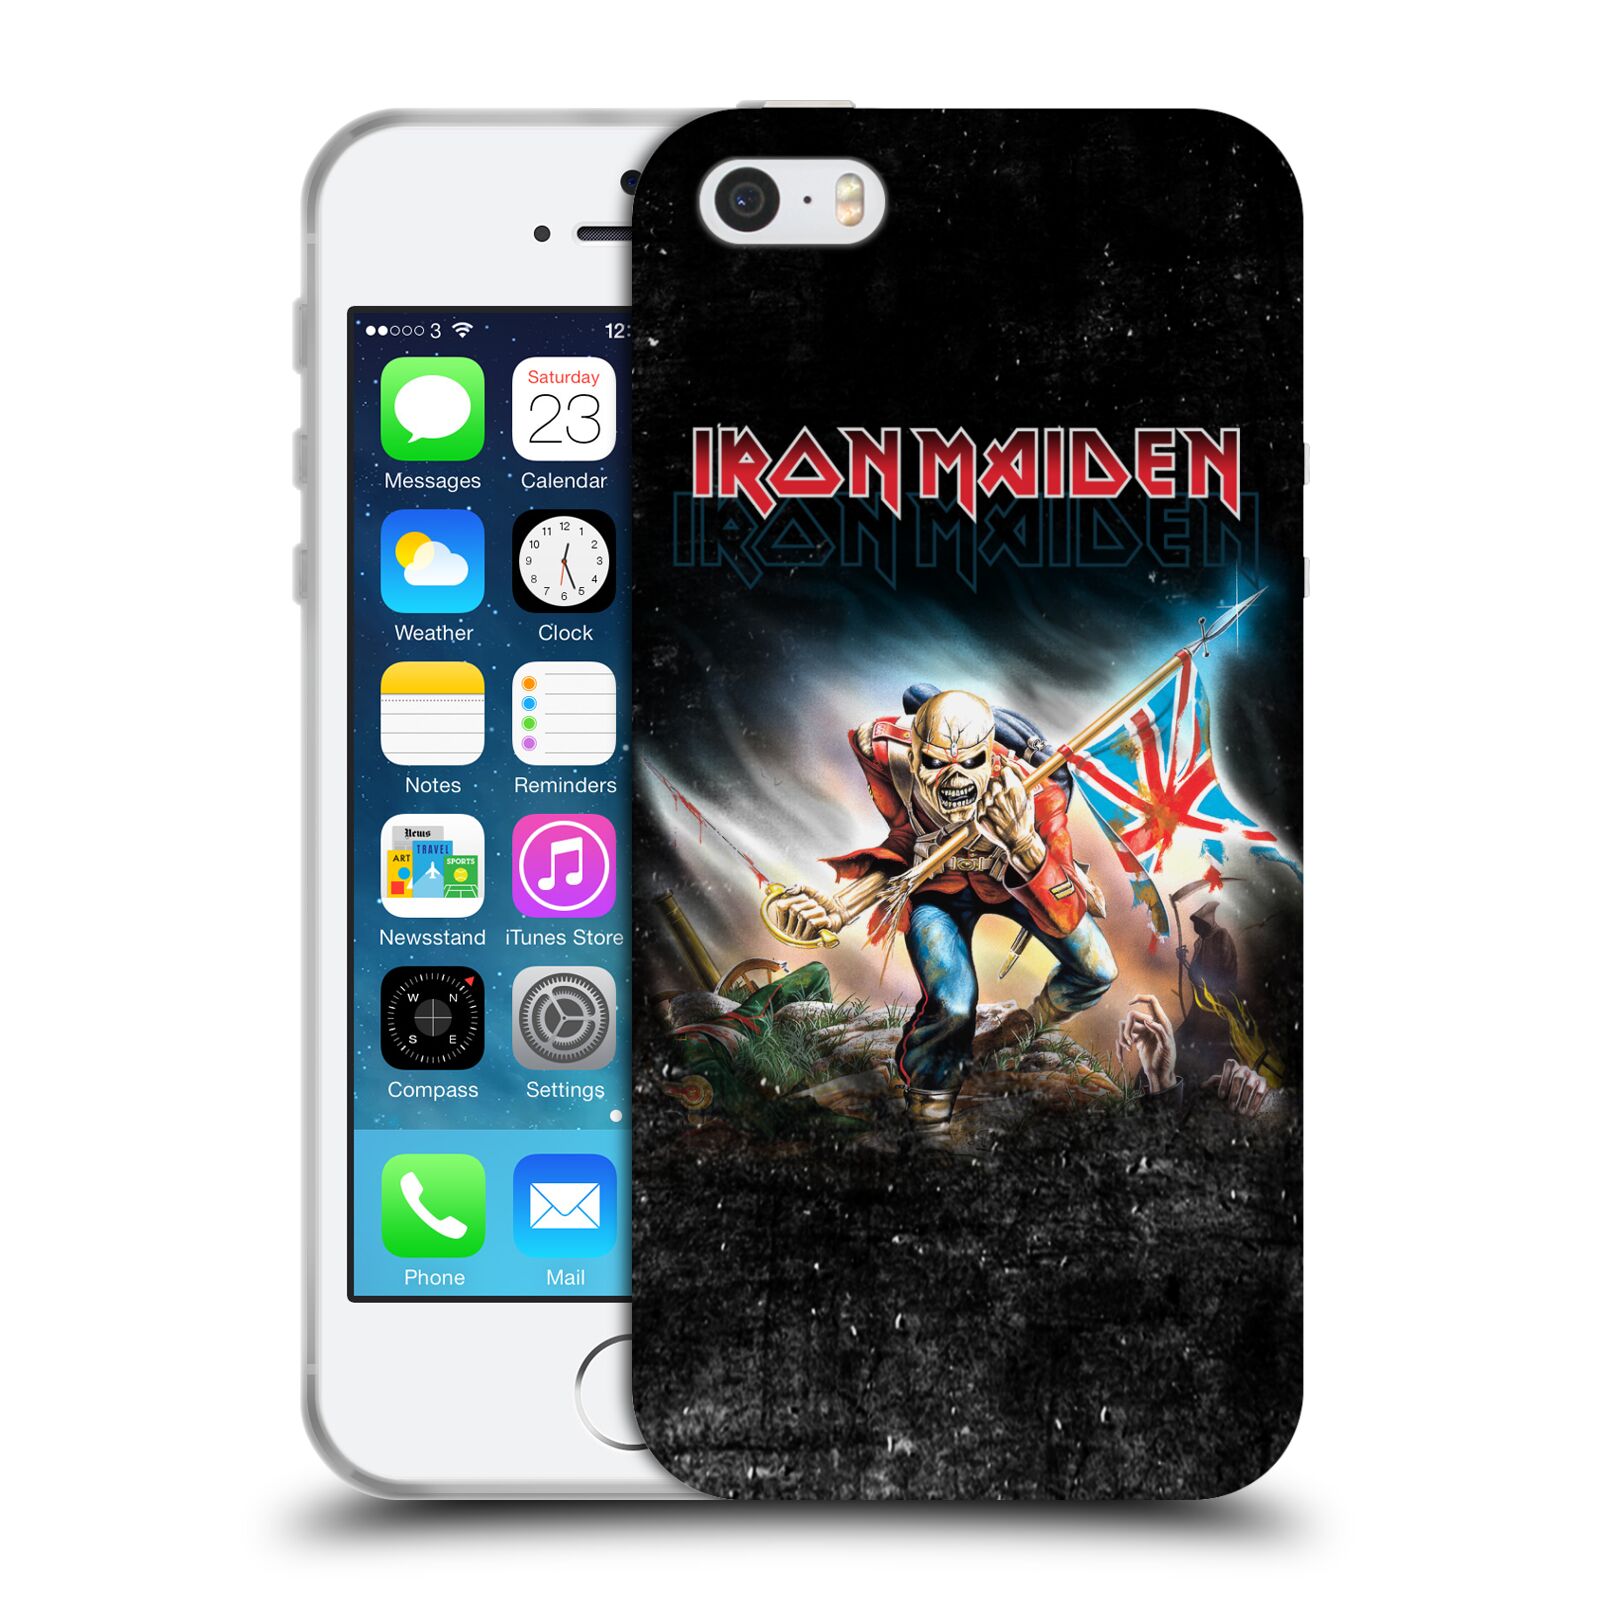 Silikonové pouzdro na mobil Apple iPhone 5, 5S, SE - Head Case - Iron Maiden - Trooper 2016 (Silikonový kryt, obal, pouzdro na mobilní telefon Apple iPhone SE, 5S a 5 s motivem Iron Maiden - Trooper 2016)